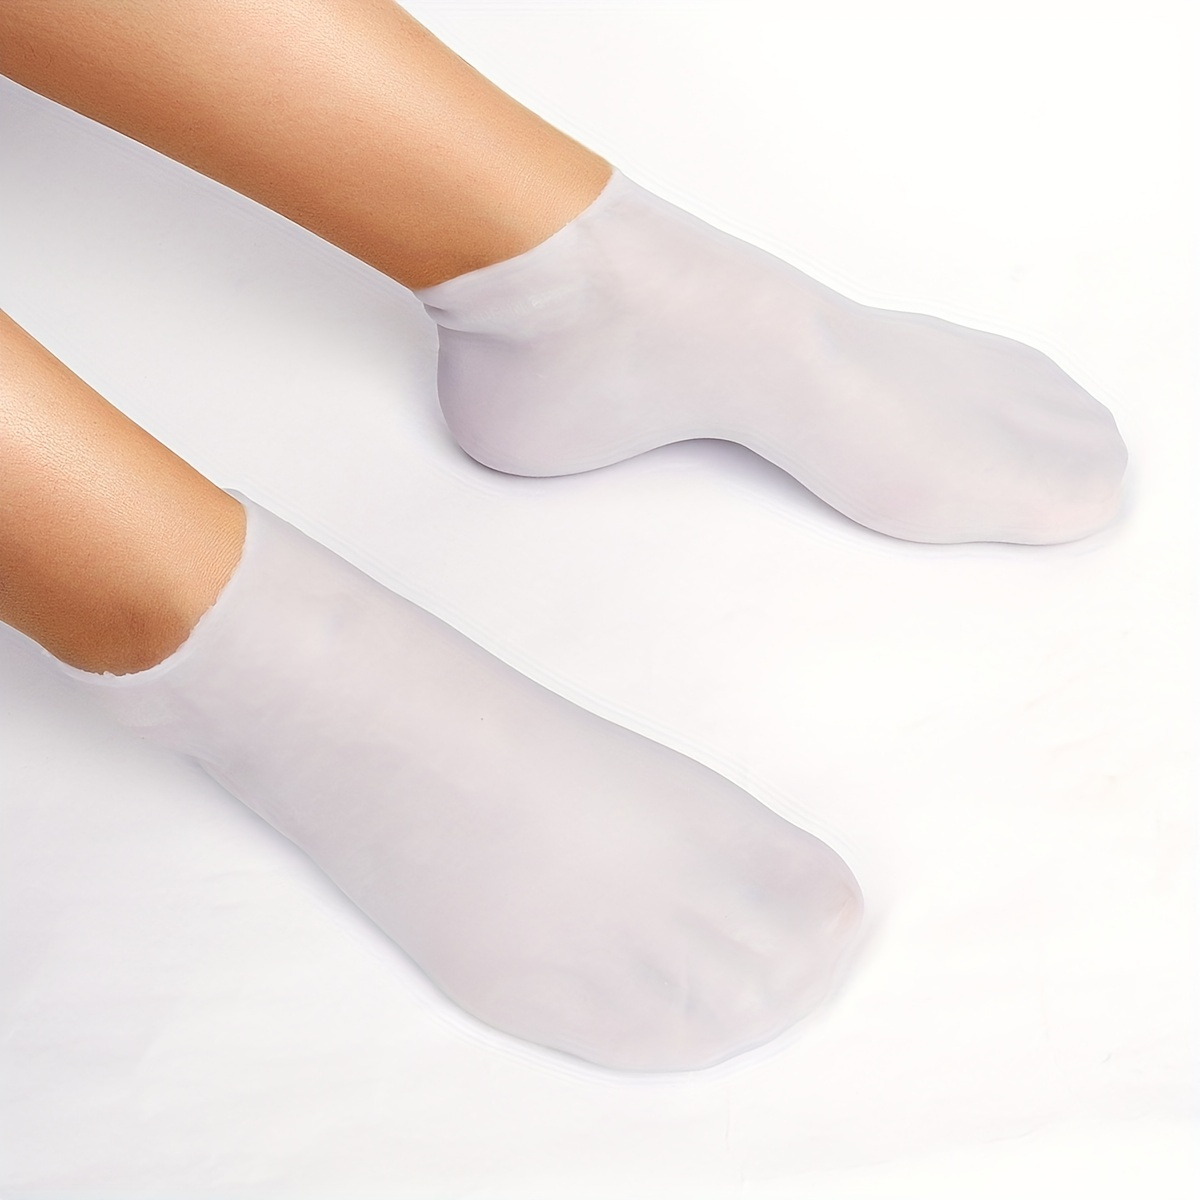 2 Pairs Moisturizing Socks Foot Spa Home Treatment Aloe Skin Moisture Dry  Feet 